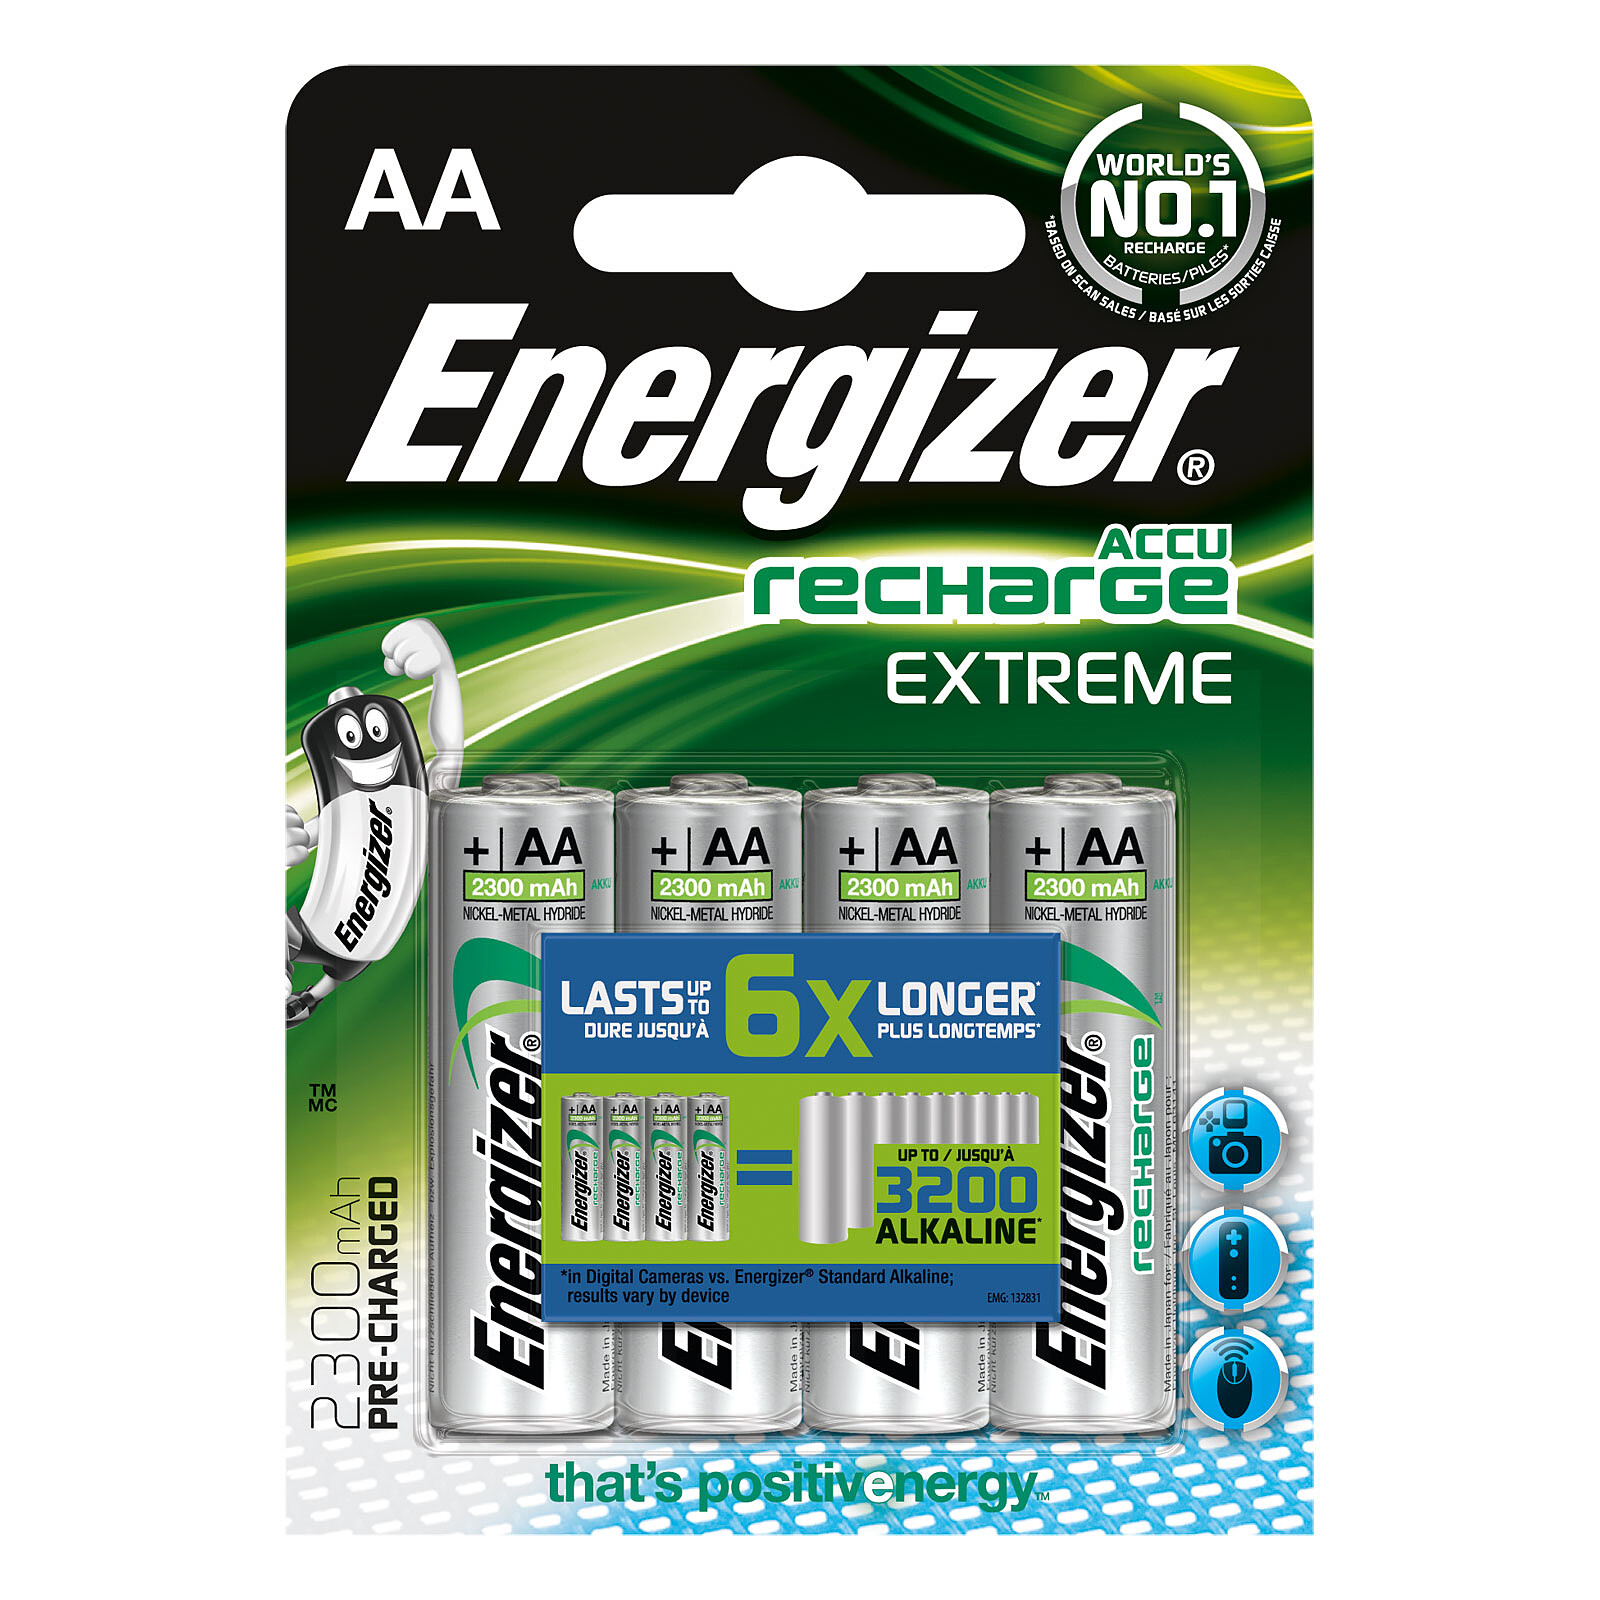 Chargeur Energizer 1H avec 4 piles AA 2300mAh - Bestpiles